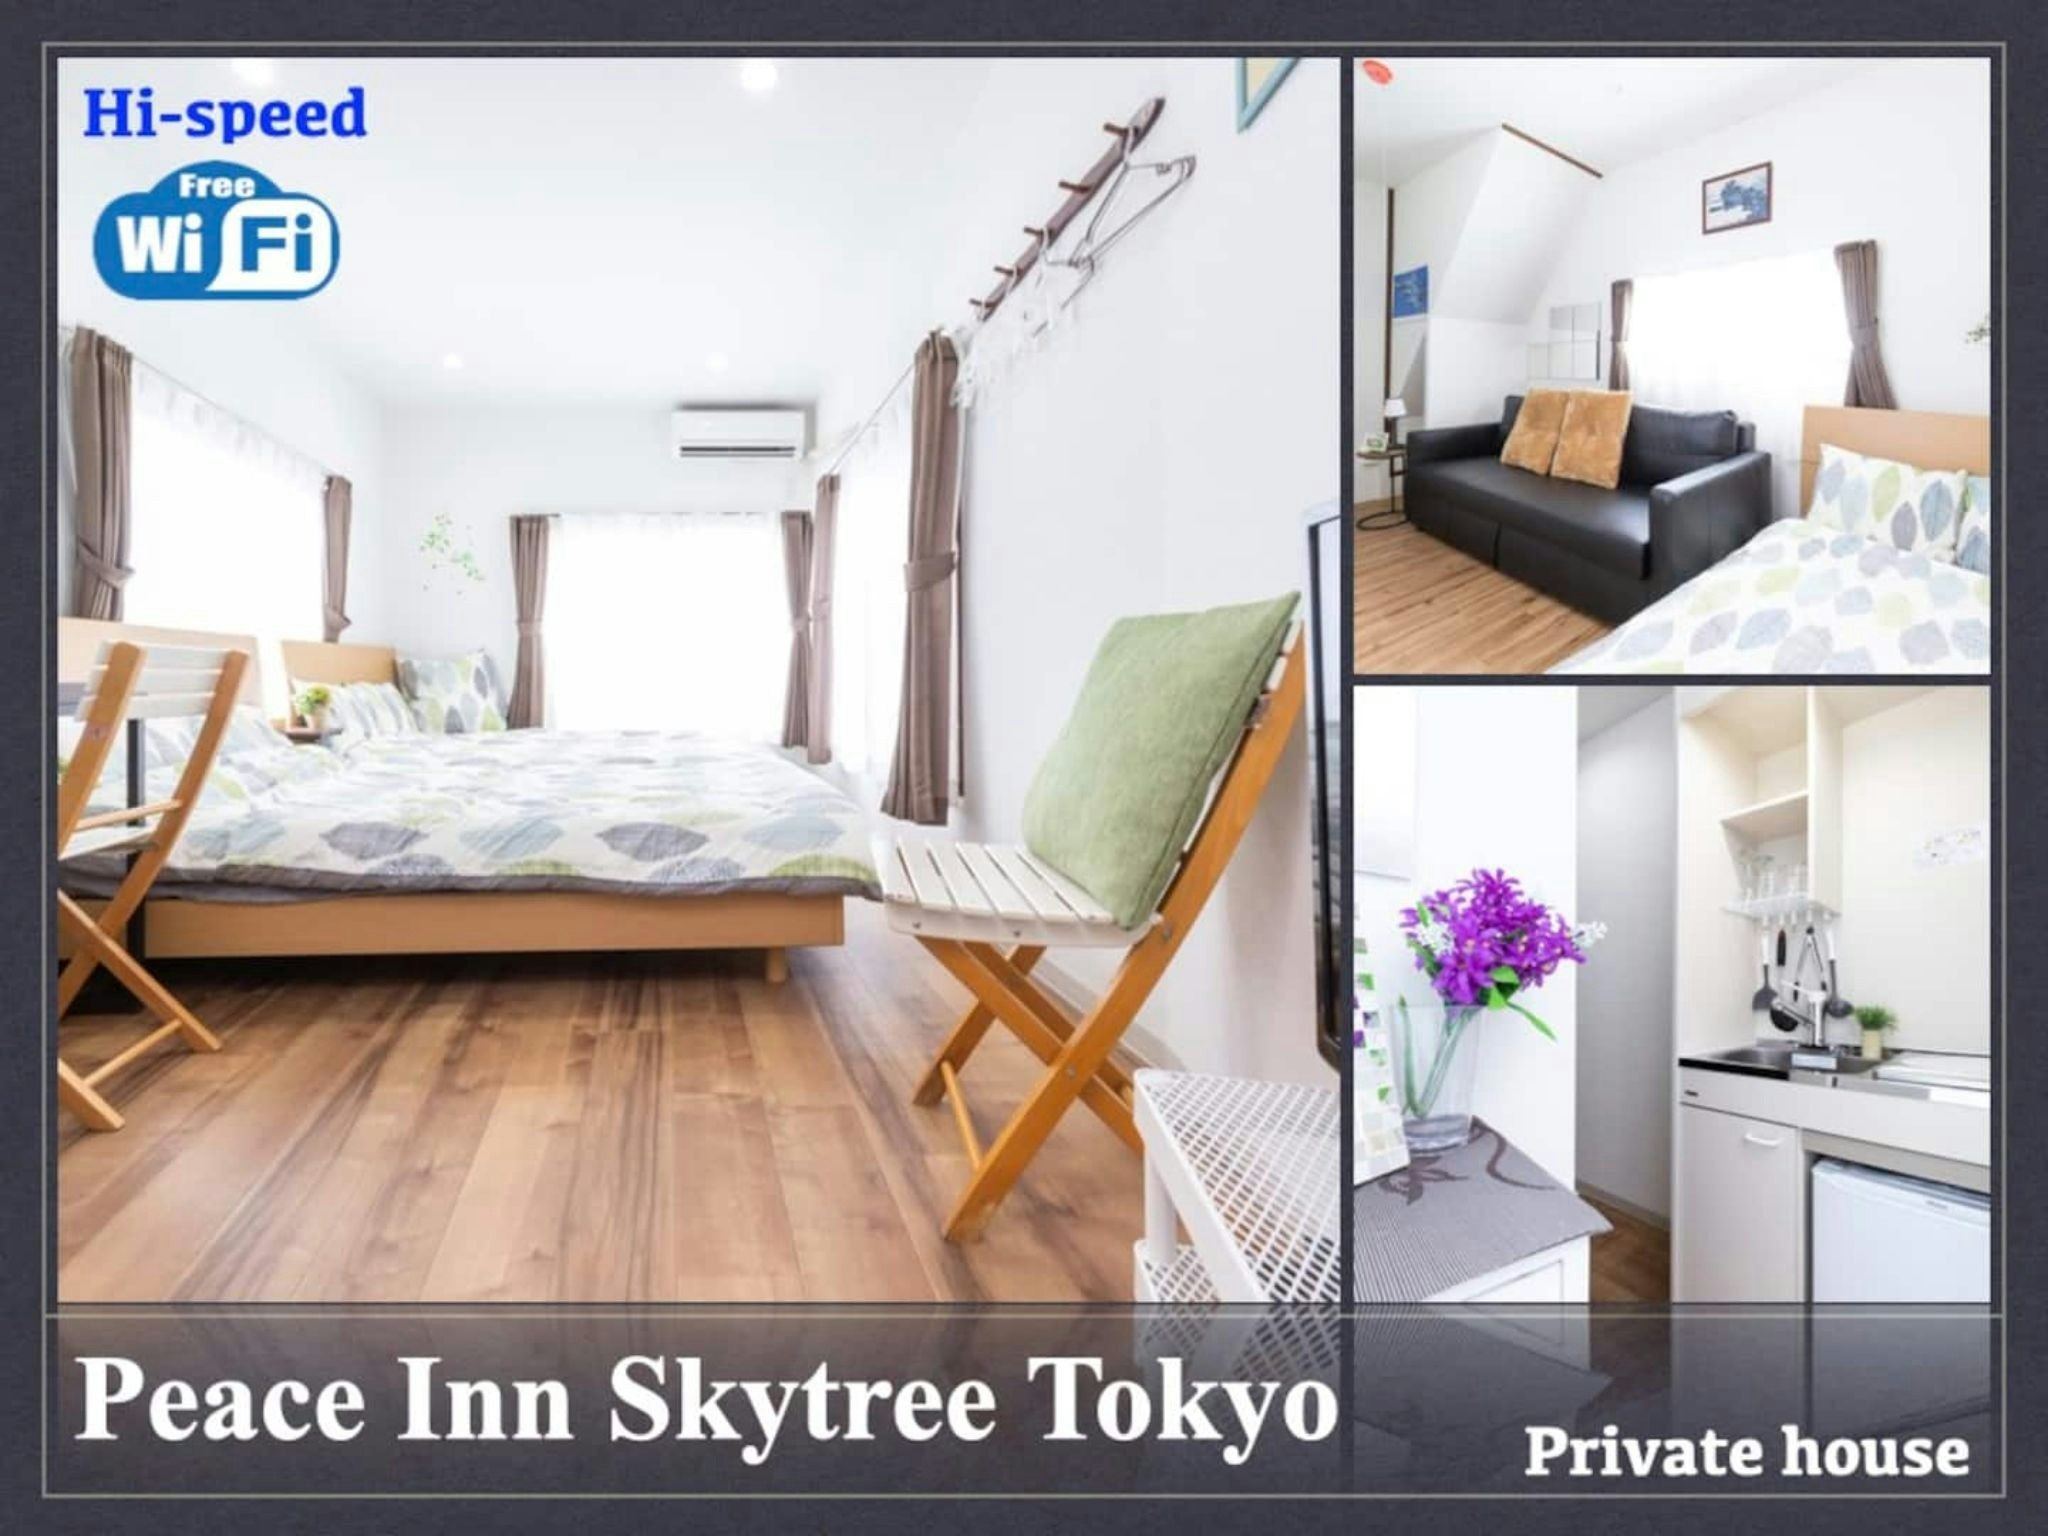 【New!シェアサイクル有】Peace Inn SkytreeTokyo/駅近/高速Wi-fi/戸建